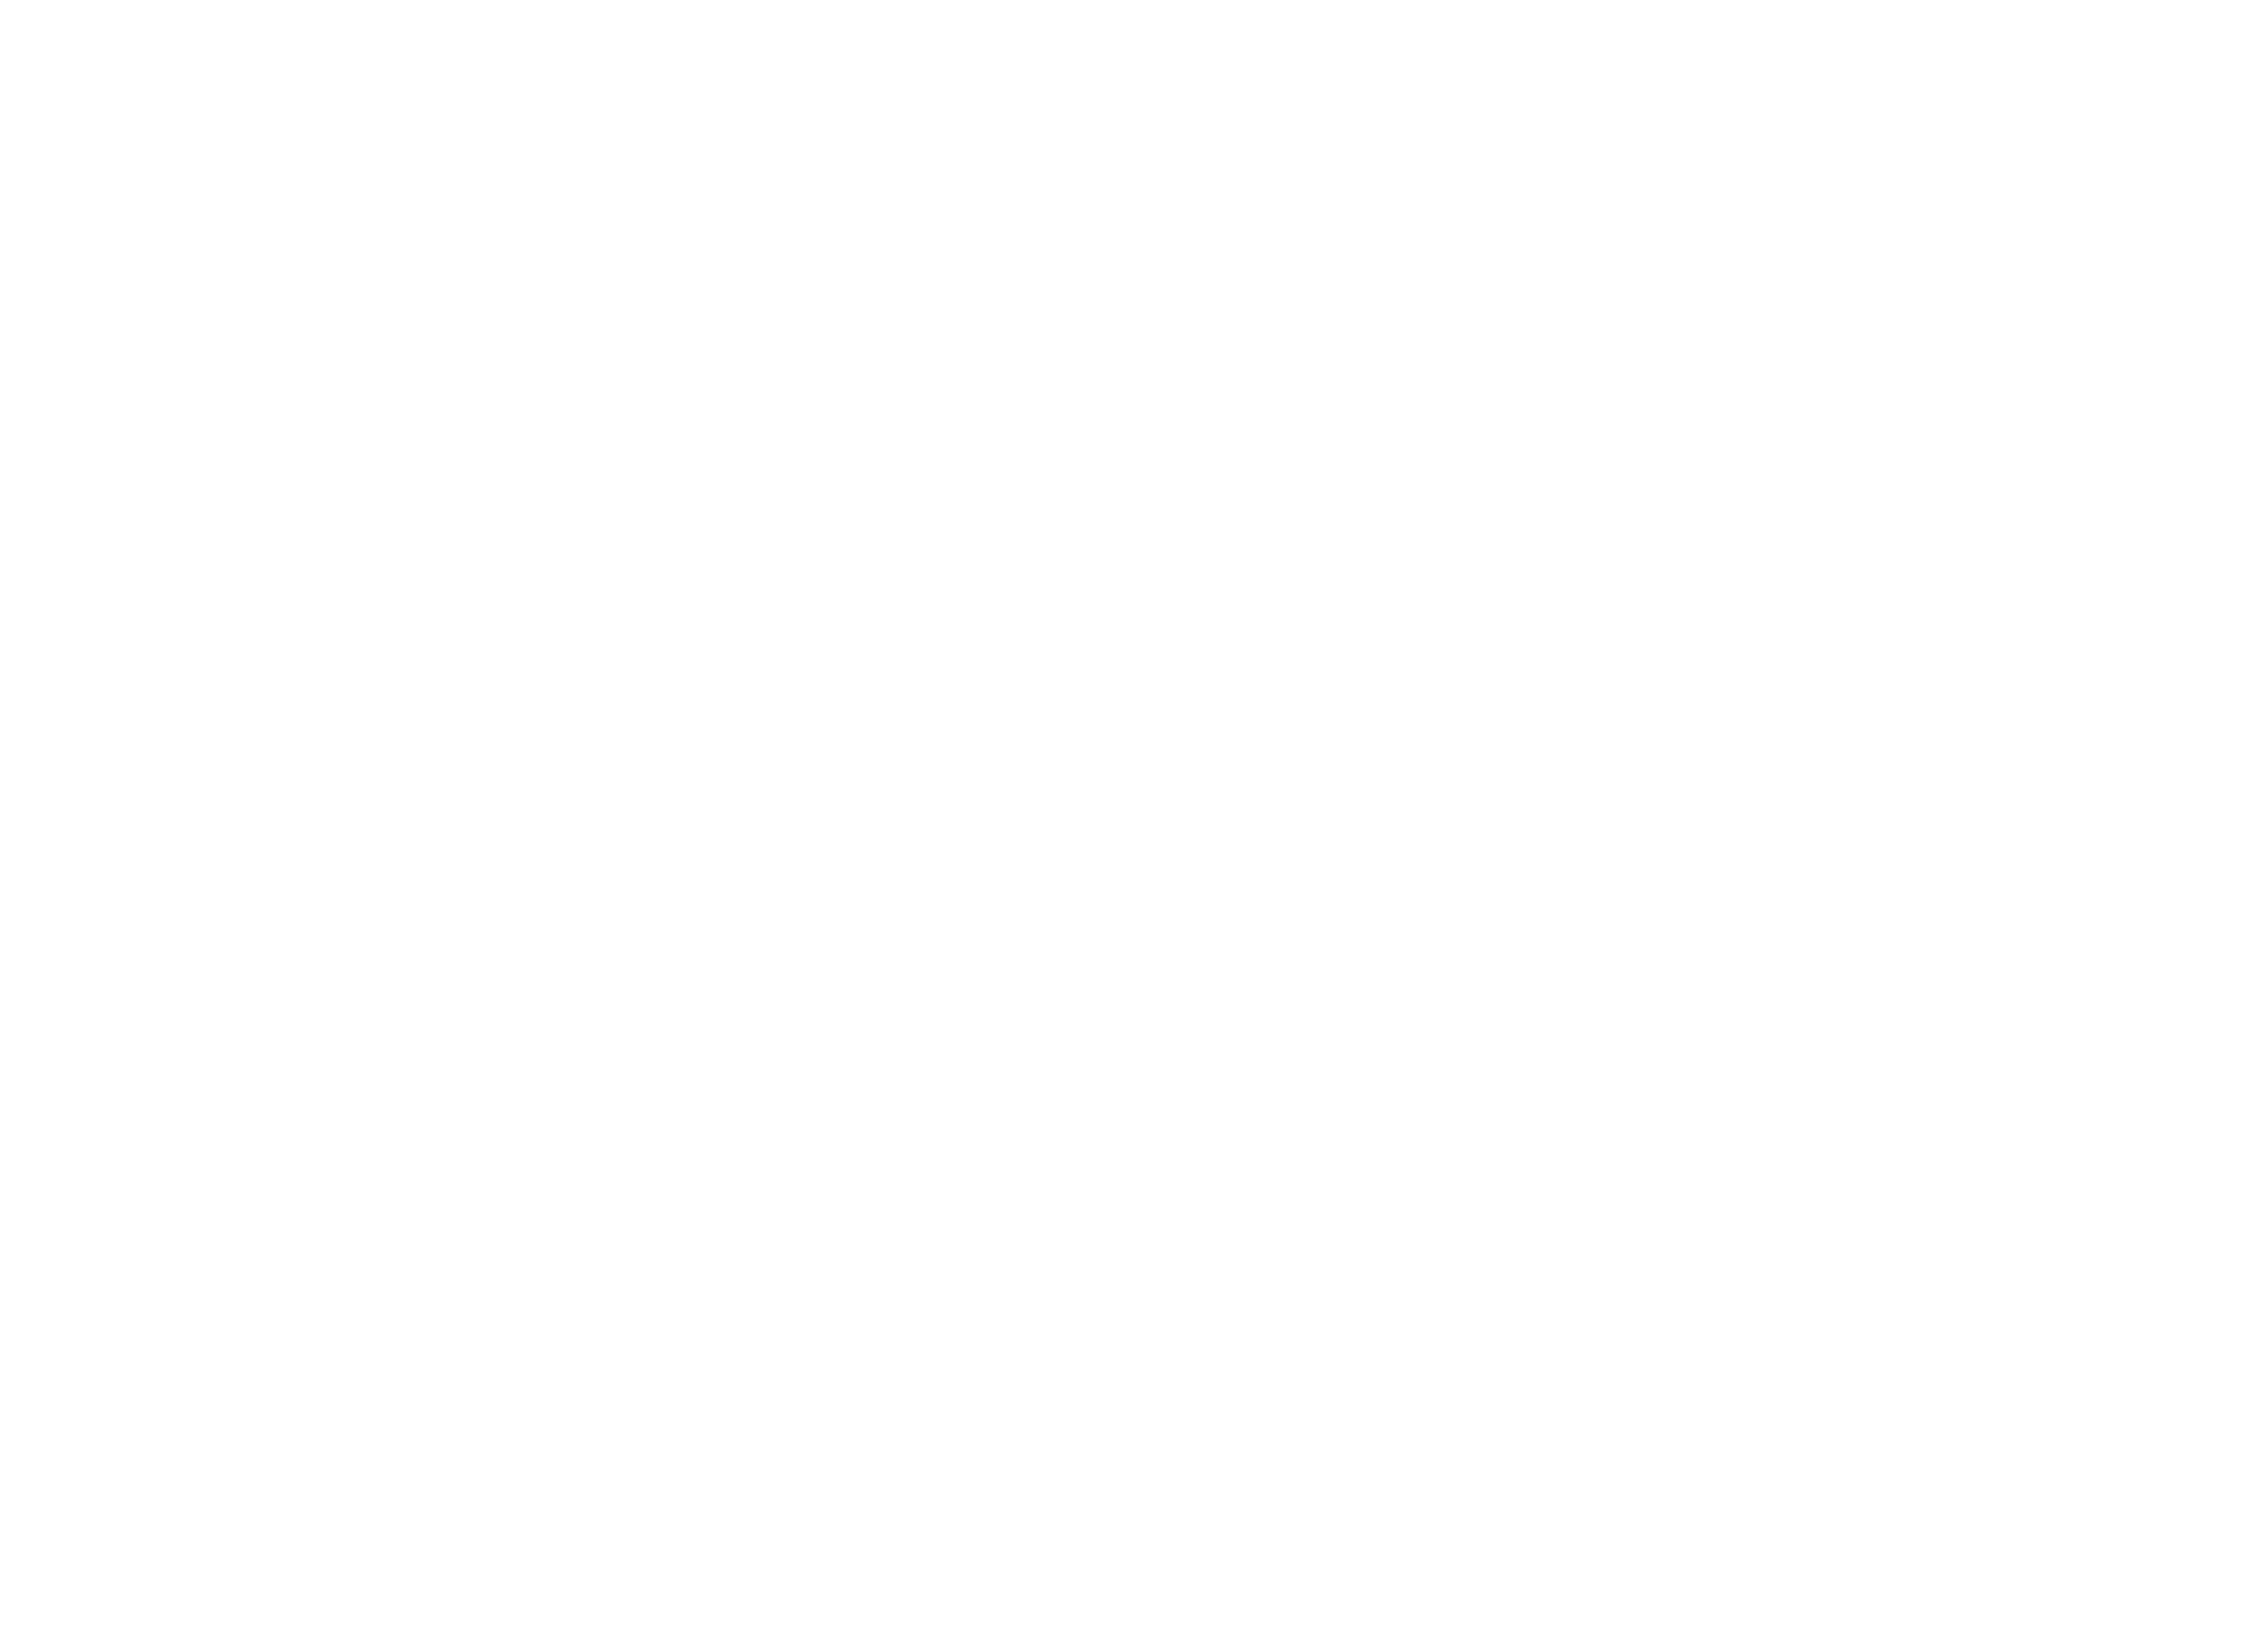 Recruitment company branding for Navitas